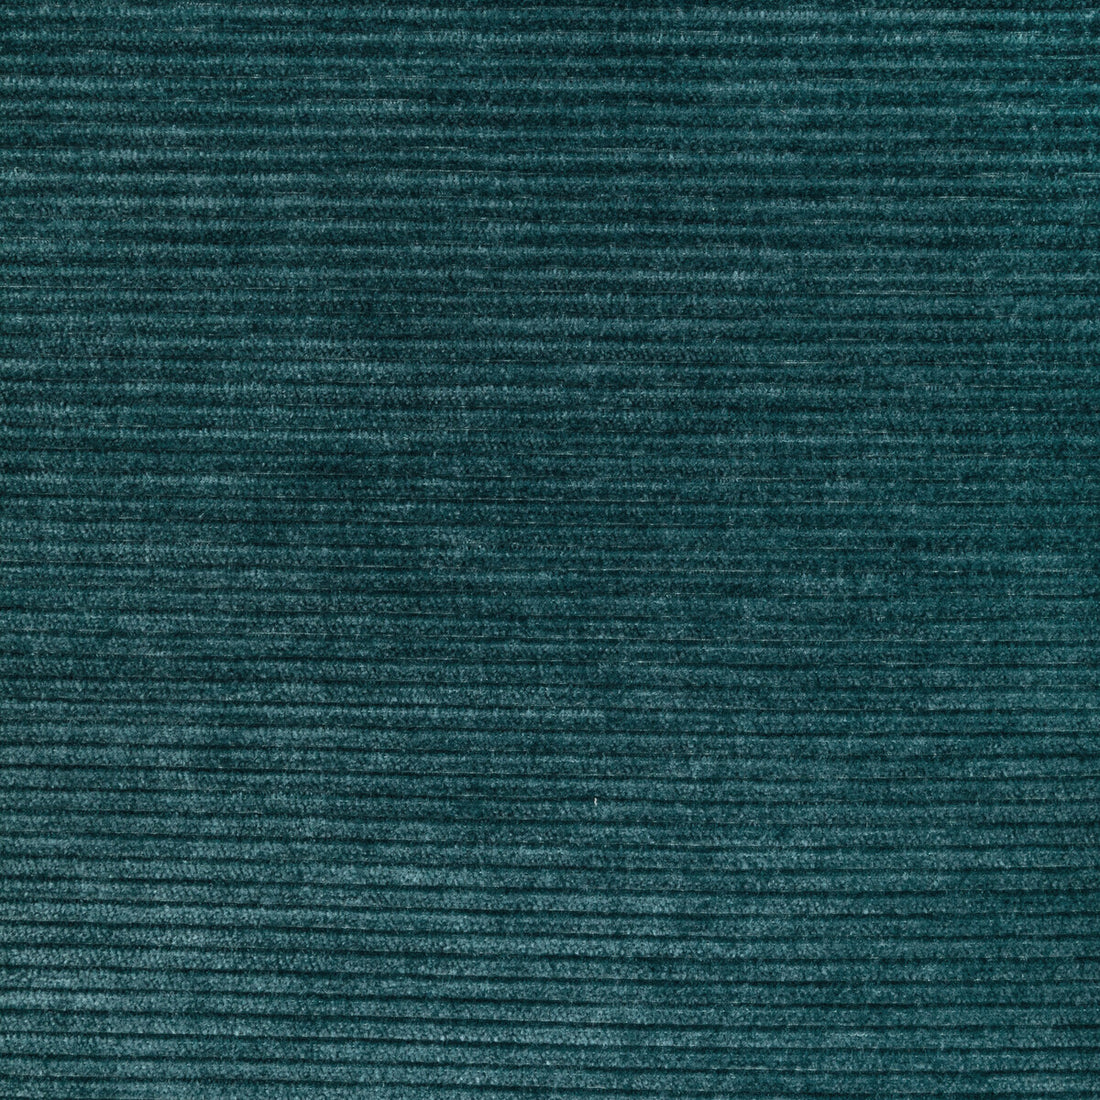 Kravet Smart fabric in 36651-13 color - pattern 36651.13.0 - by Kravet Smart in the Performance Kravetarmor collection